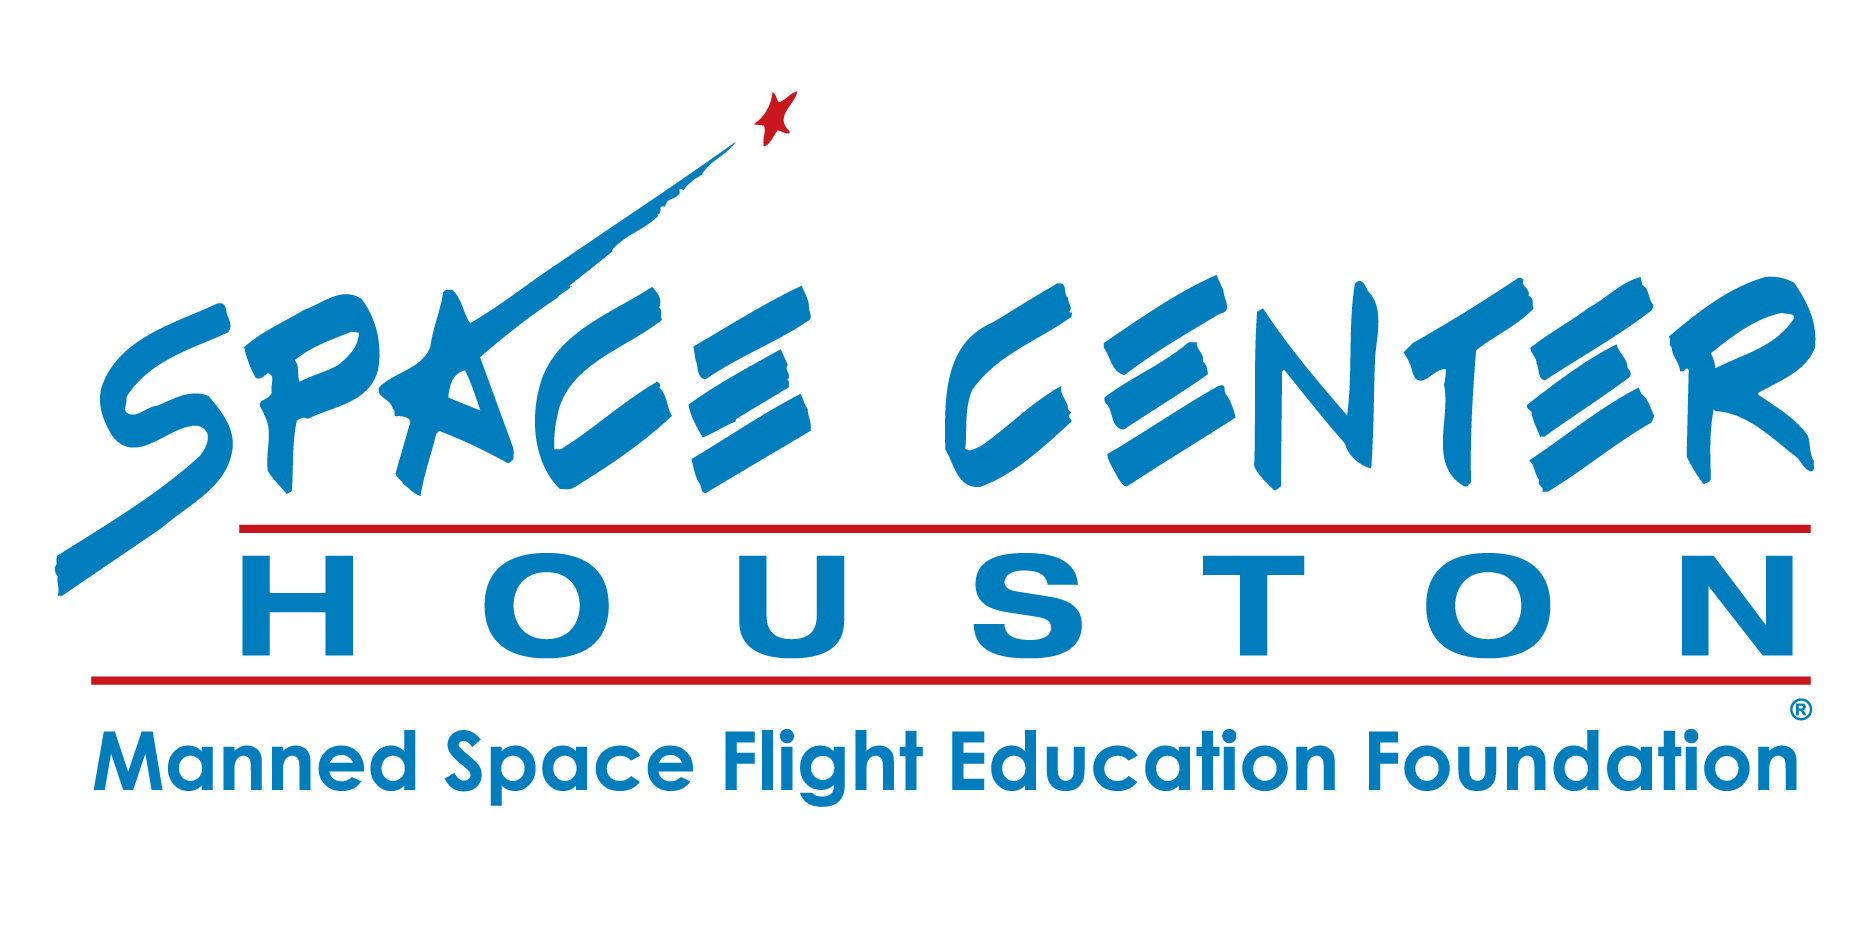 MSFEFI-Space-Center-Houston-Logo-Horizontal-Color